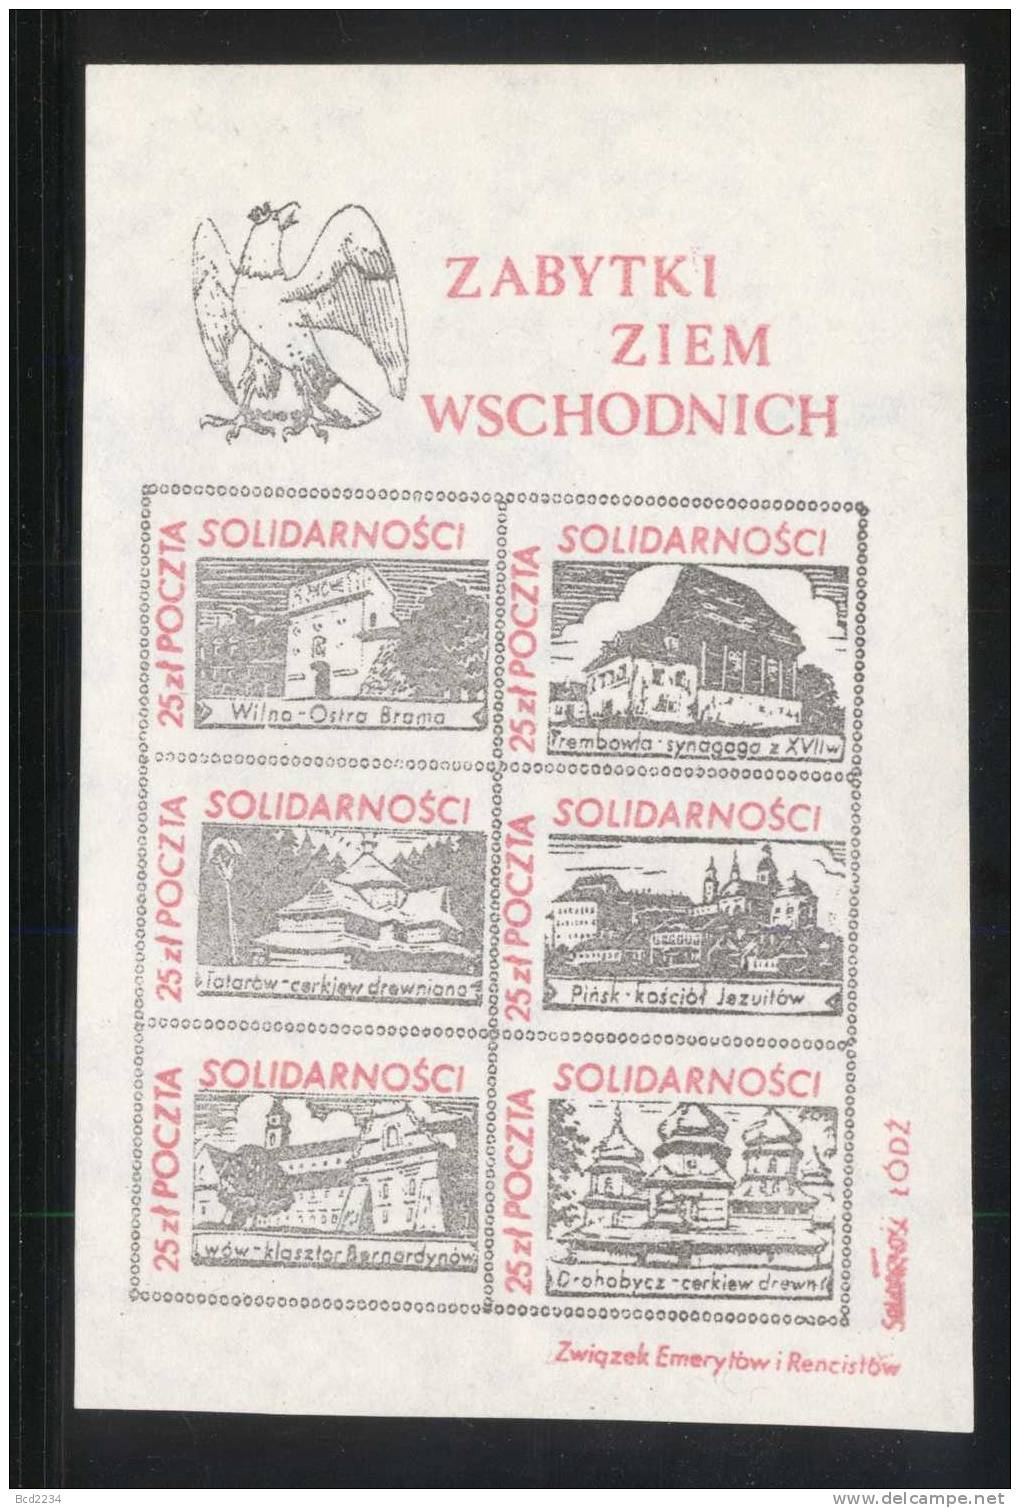 POLAND SOLIDARNOSC (SOLIDARNOSC  LODZ) HISTORICAL BUILDINGS IN EASTERN LANDS LITHUANIA UKRAINE  THICK (SOLID0448/0777) - Solidarnosc Labels